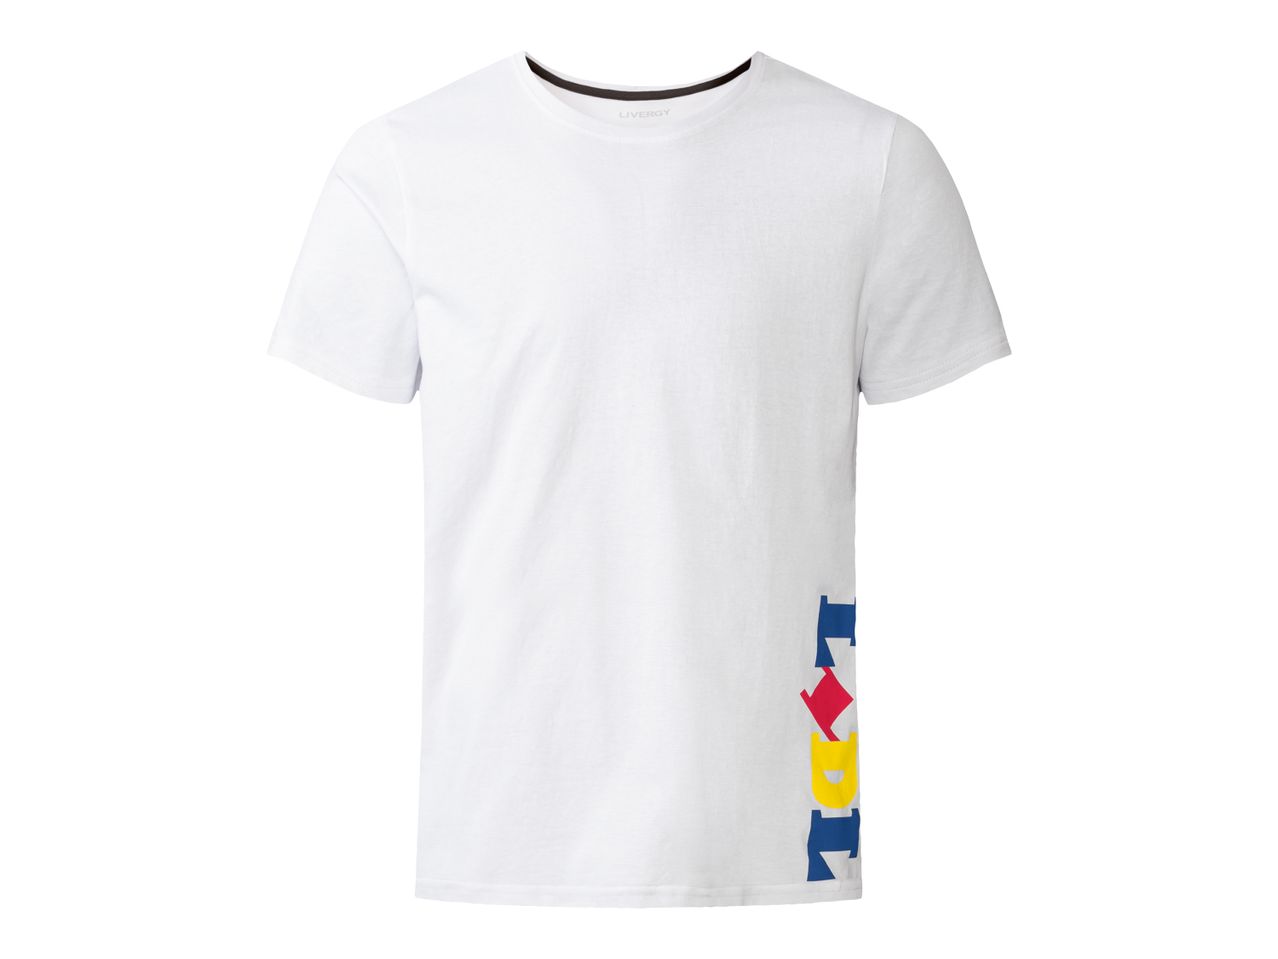 T-shirt da uomo Lidl , prezzo 4.99 EUR 
T-shirt da uomo 